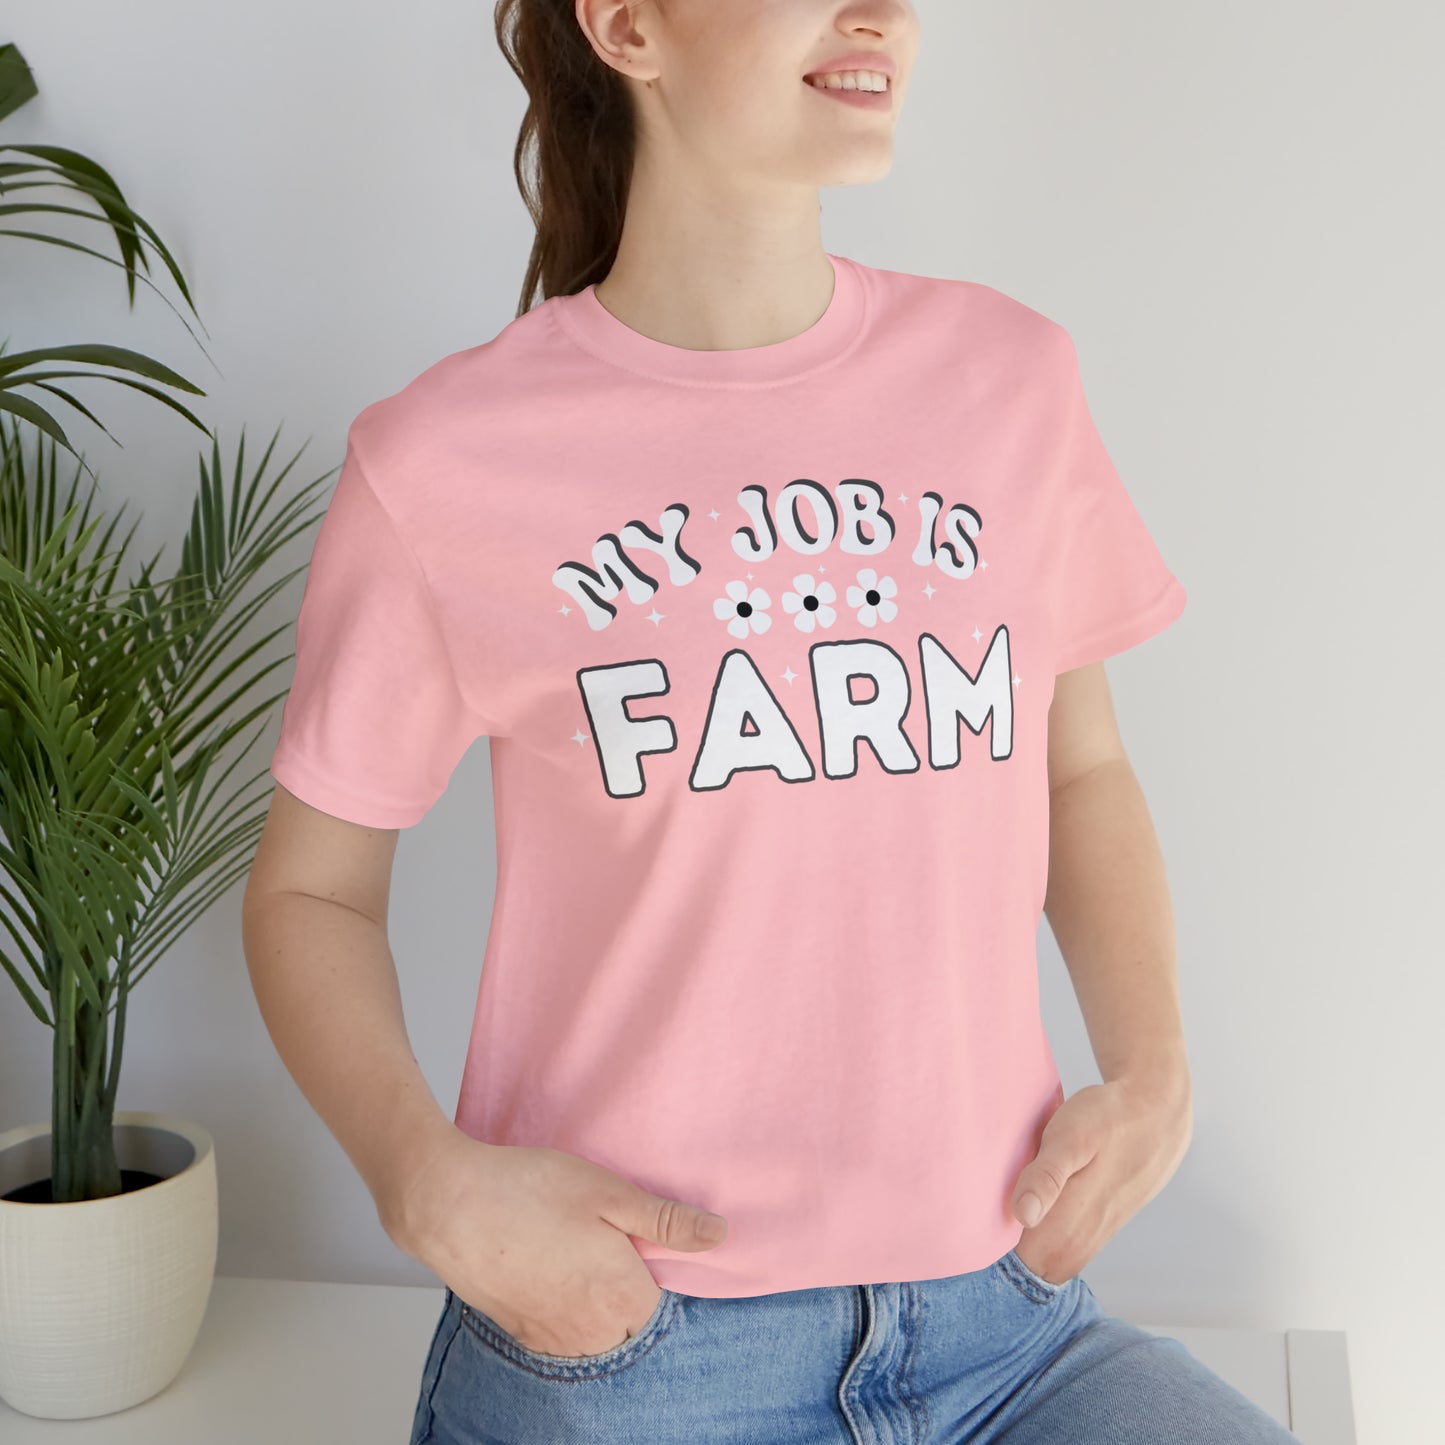 My Job is Farm Shirt Farmer Shirt Farming Shirt Homestead Gardening Shirt Farmers, Farmhand, Livestock Farmer, Crop Grower Horticulturist, Animal Scientist, Agricultural Engineer Environmental Scientist, 